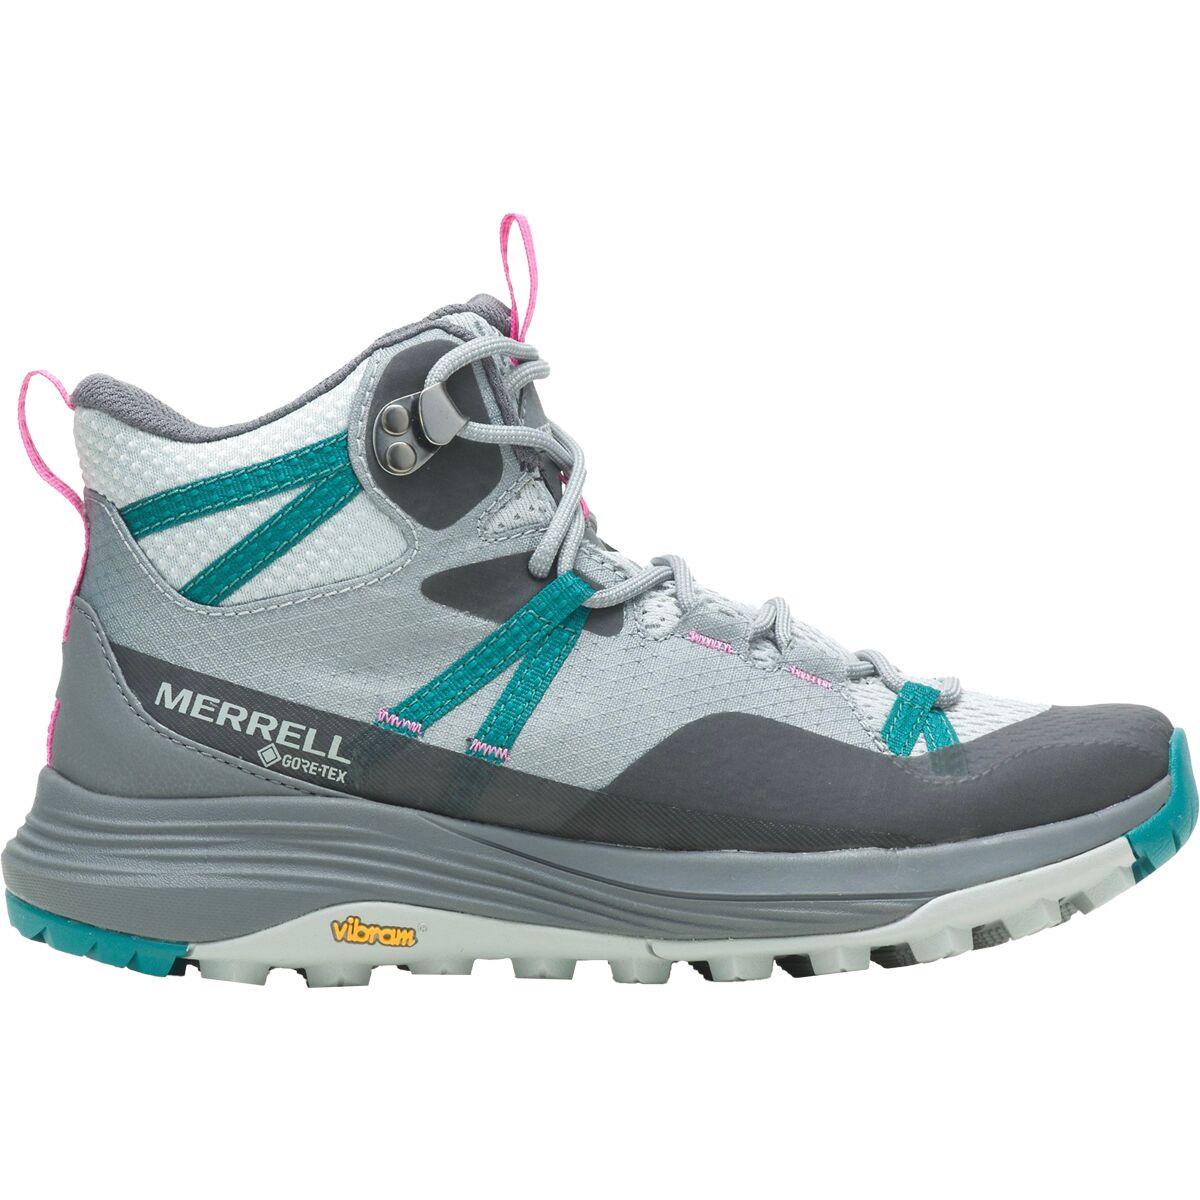 Merrell Siren 4 Mid GTX Hiking Boot - Women's